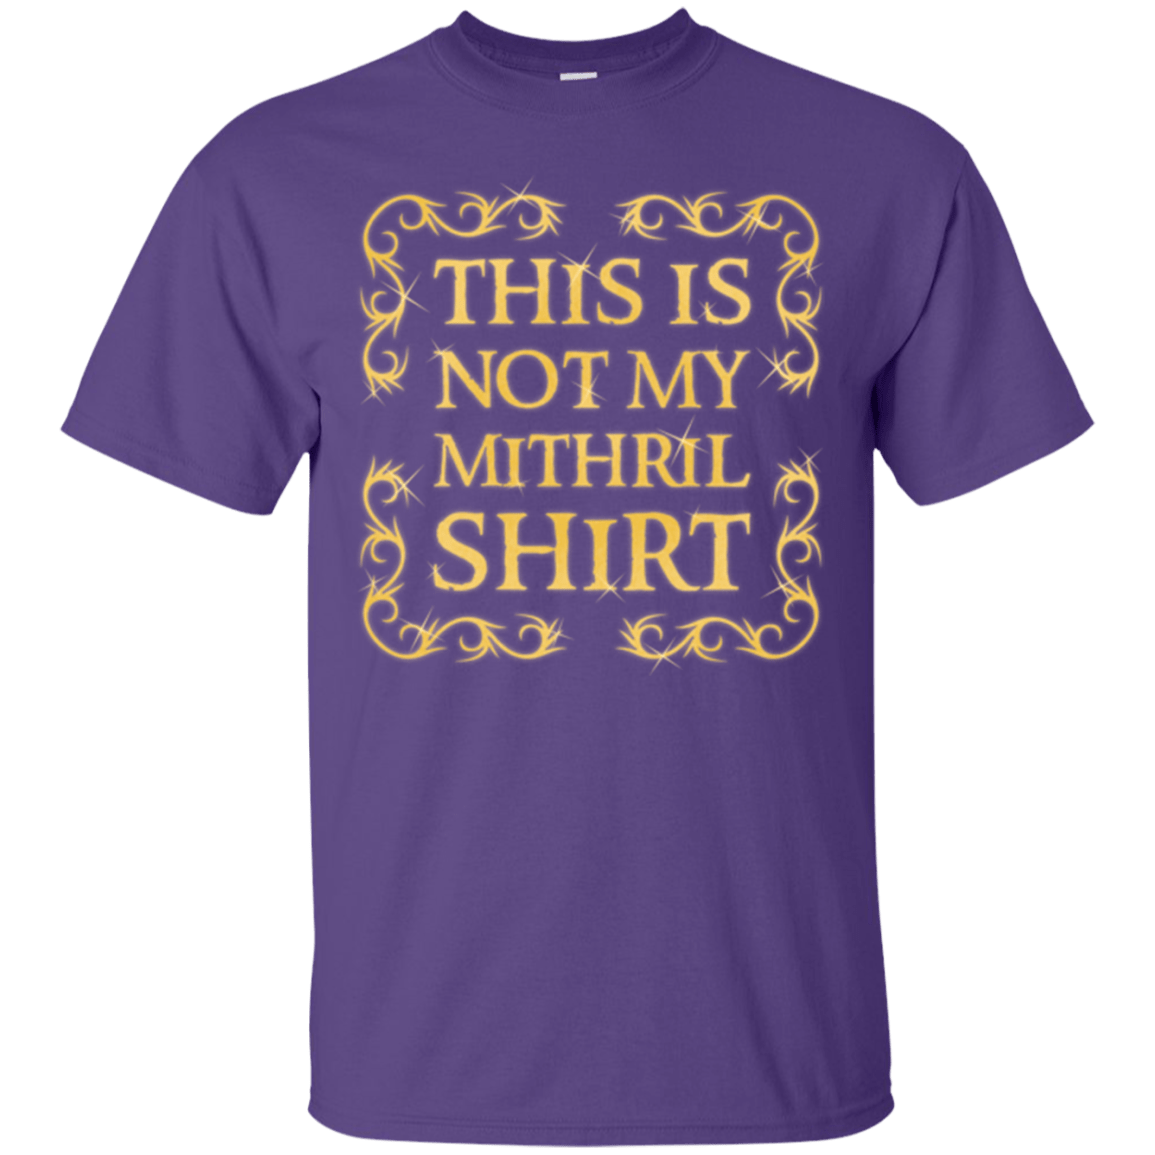 T-Shirts Purple / Small Not my shirt T-Shirt